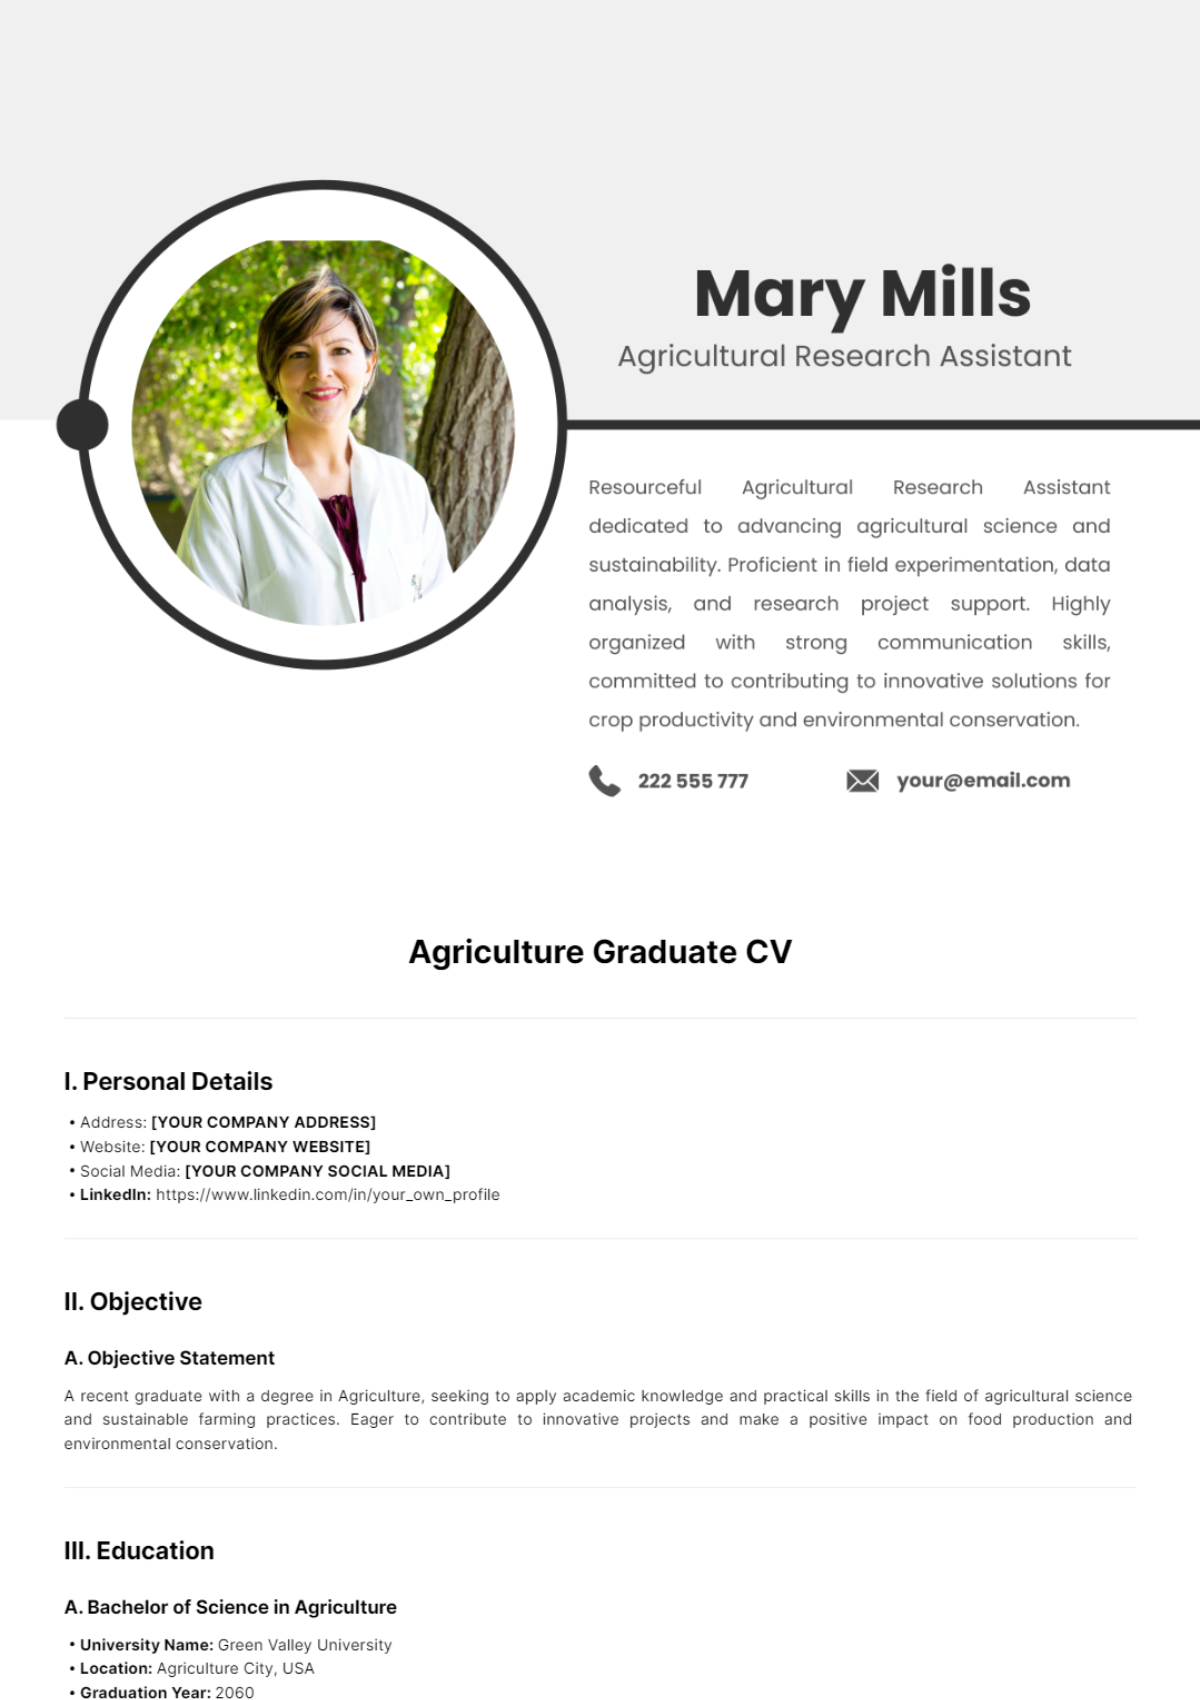 Free Agriculture Graduate CV Template